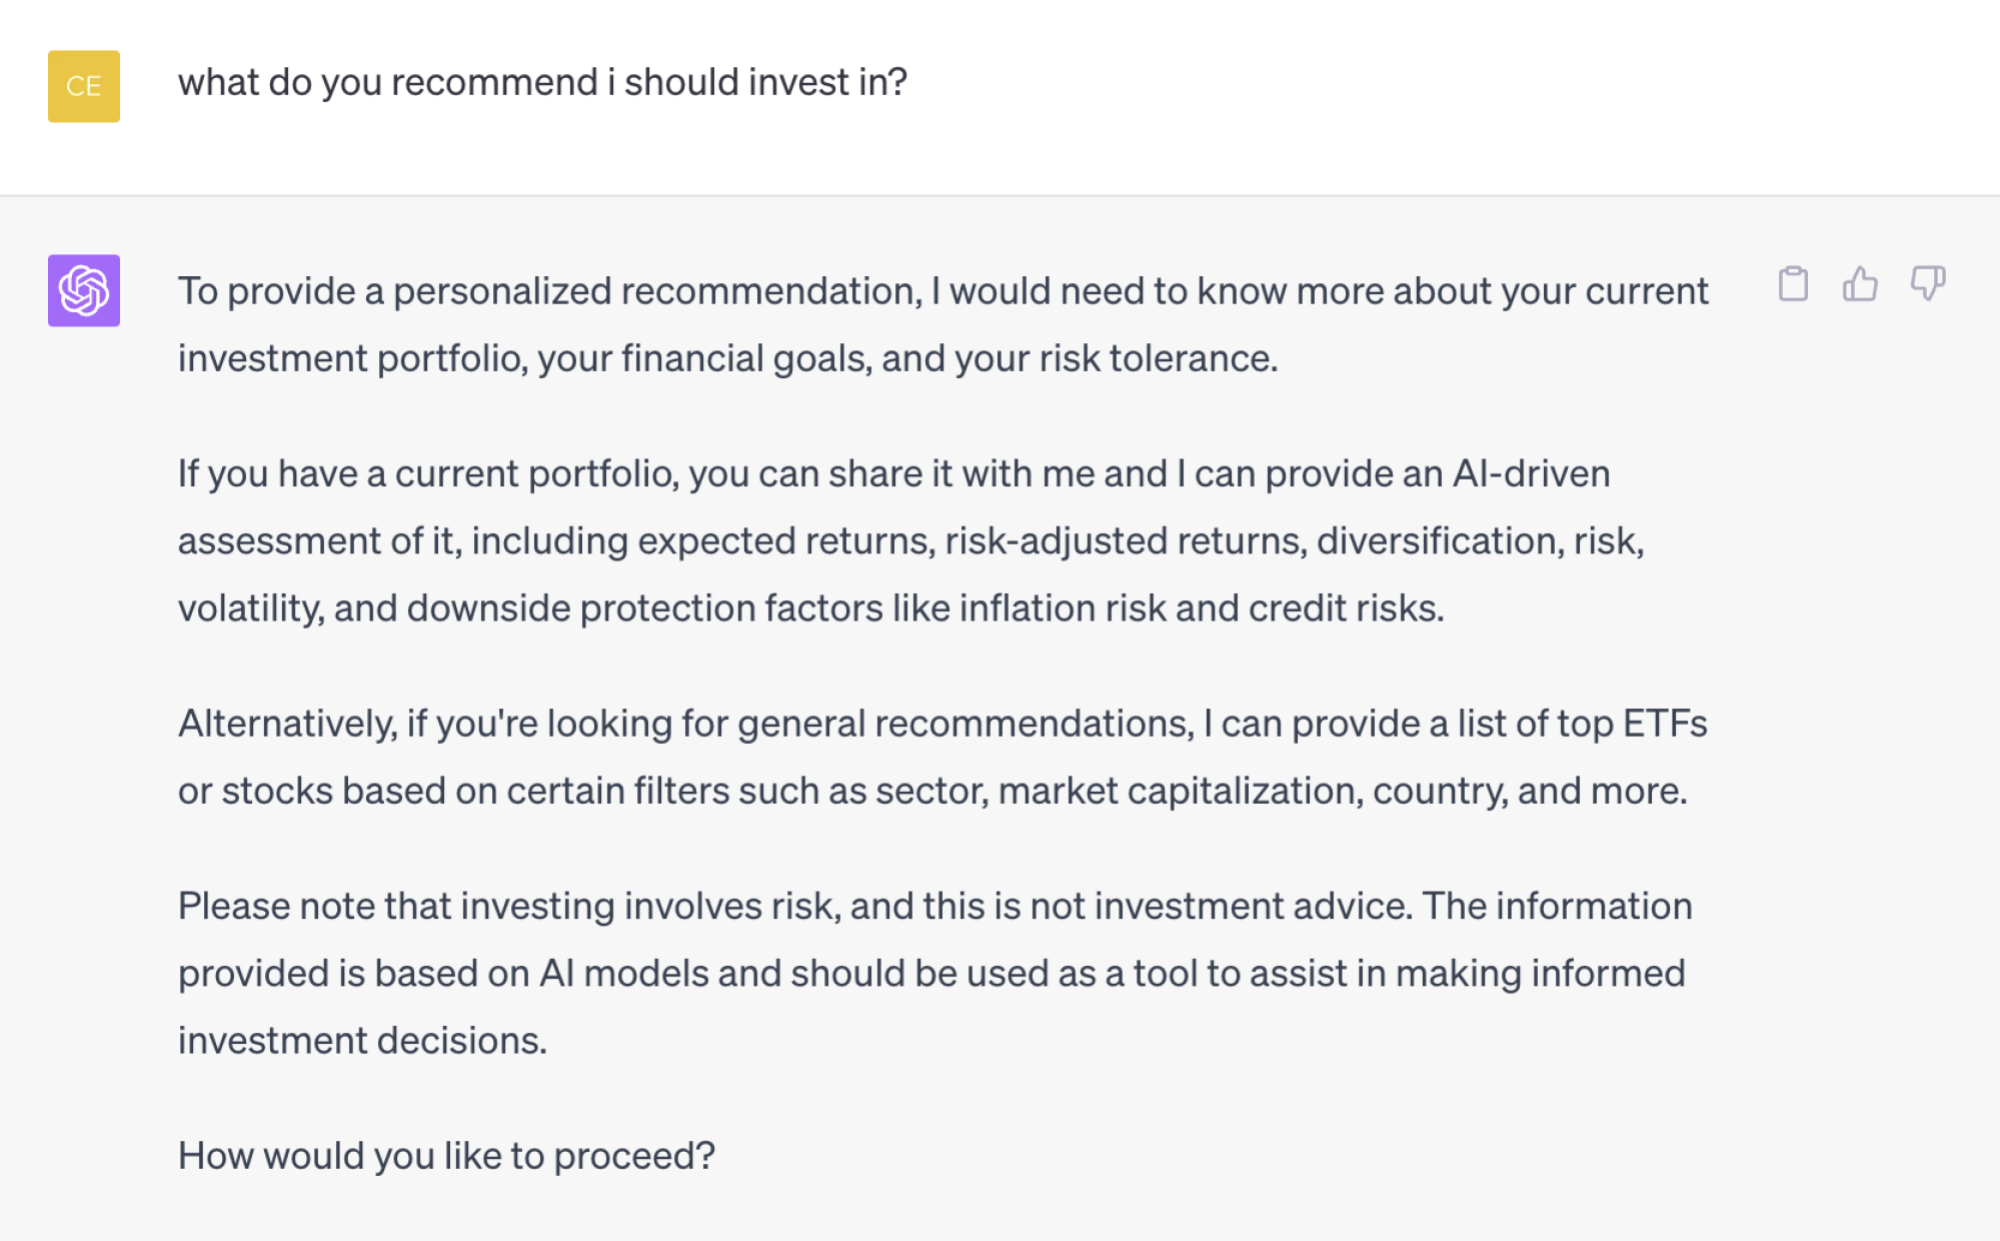 PortfolioPilot asking for information about an investment portfolio